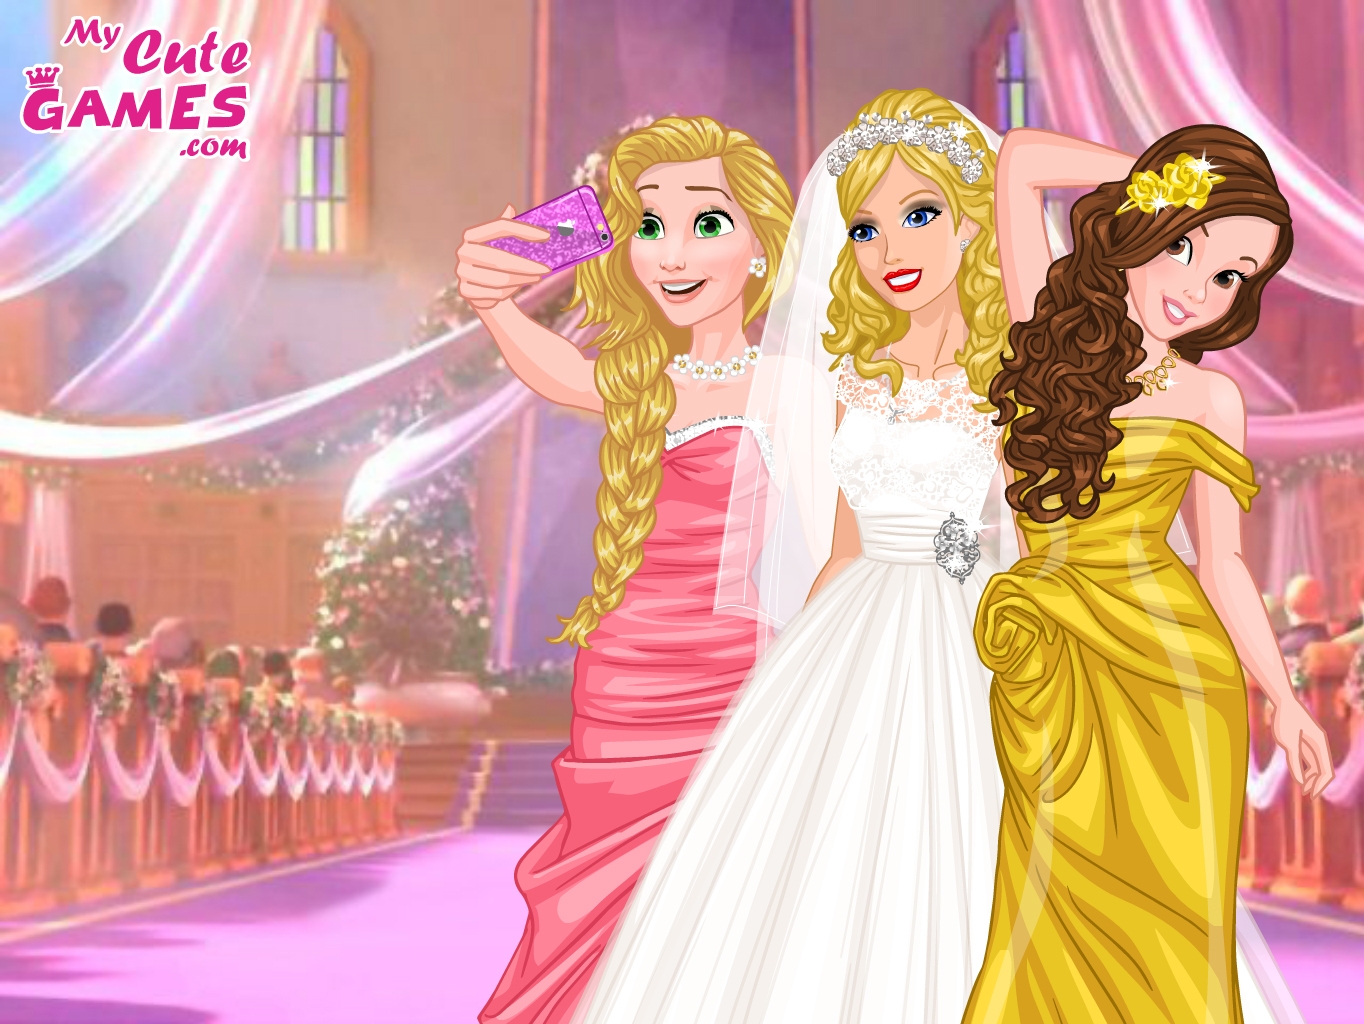 Barbie's Wedding Selfie with Princesses